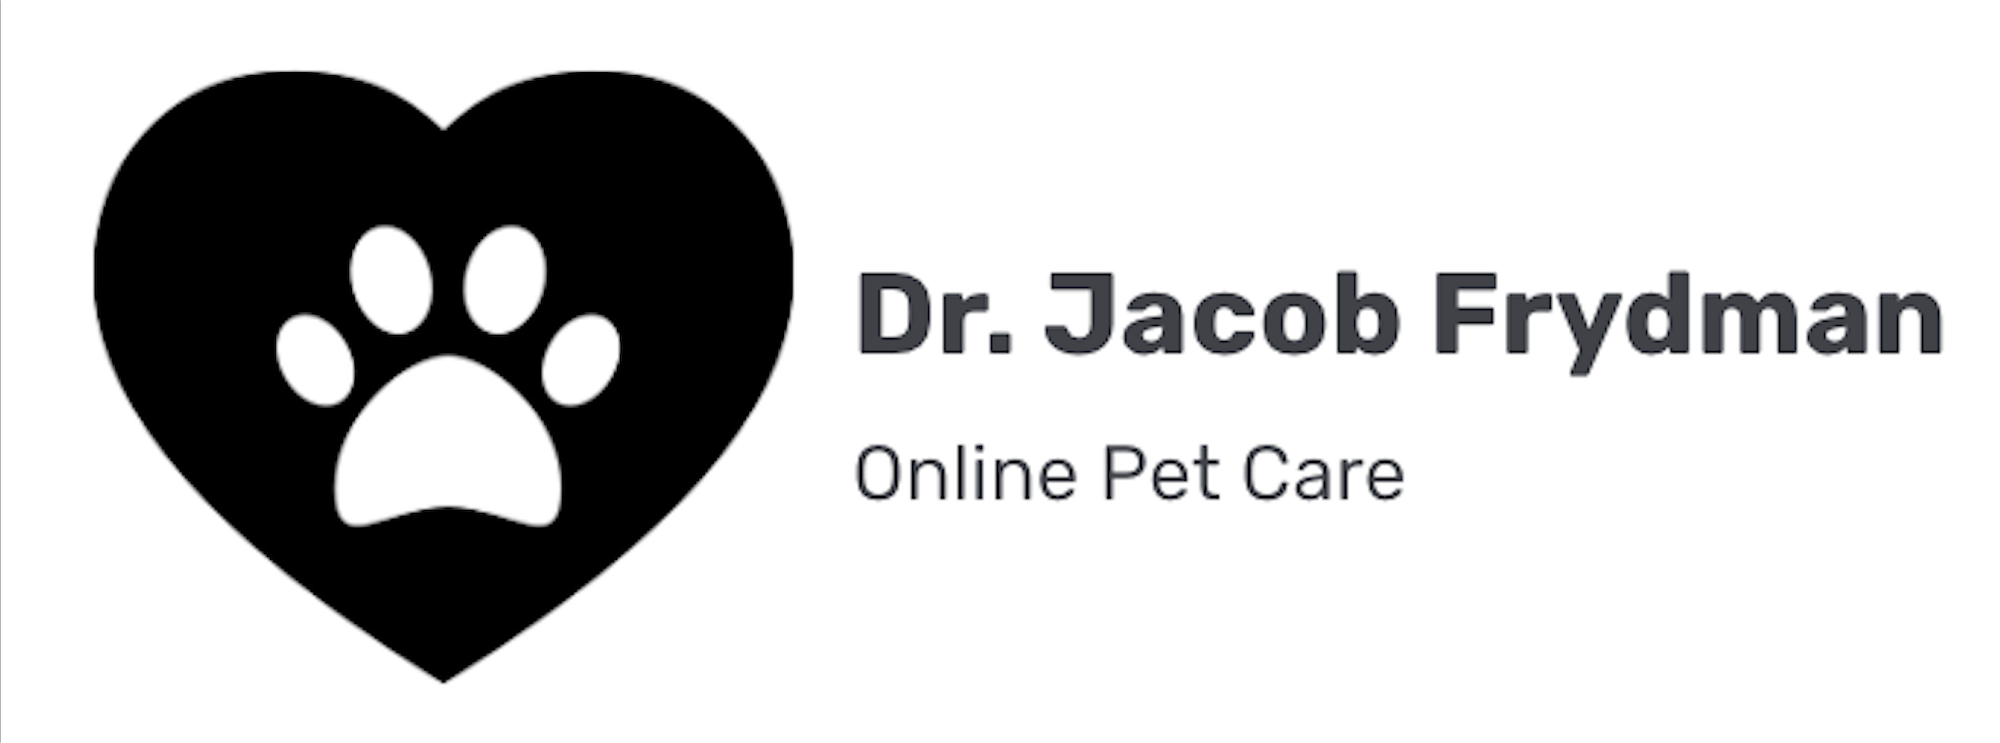 Jacob Frydman Online Pet Care Logo